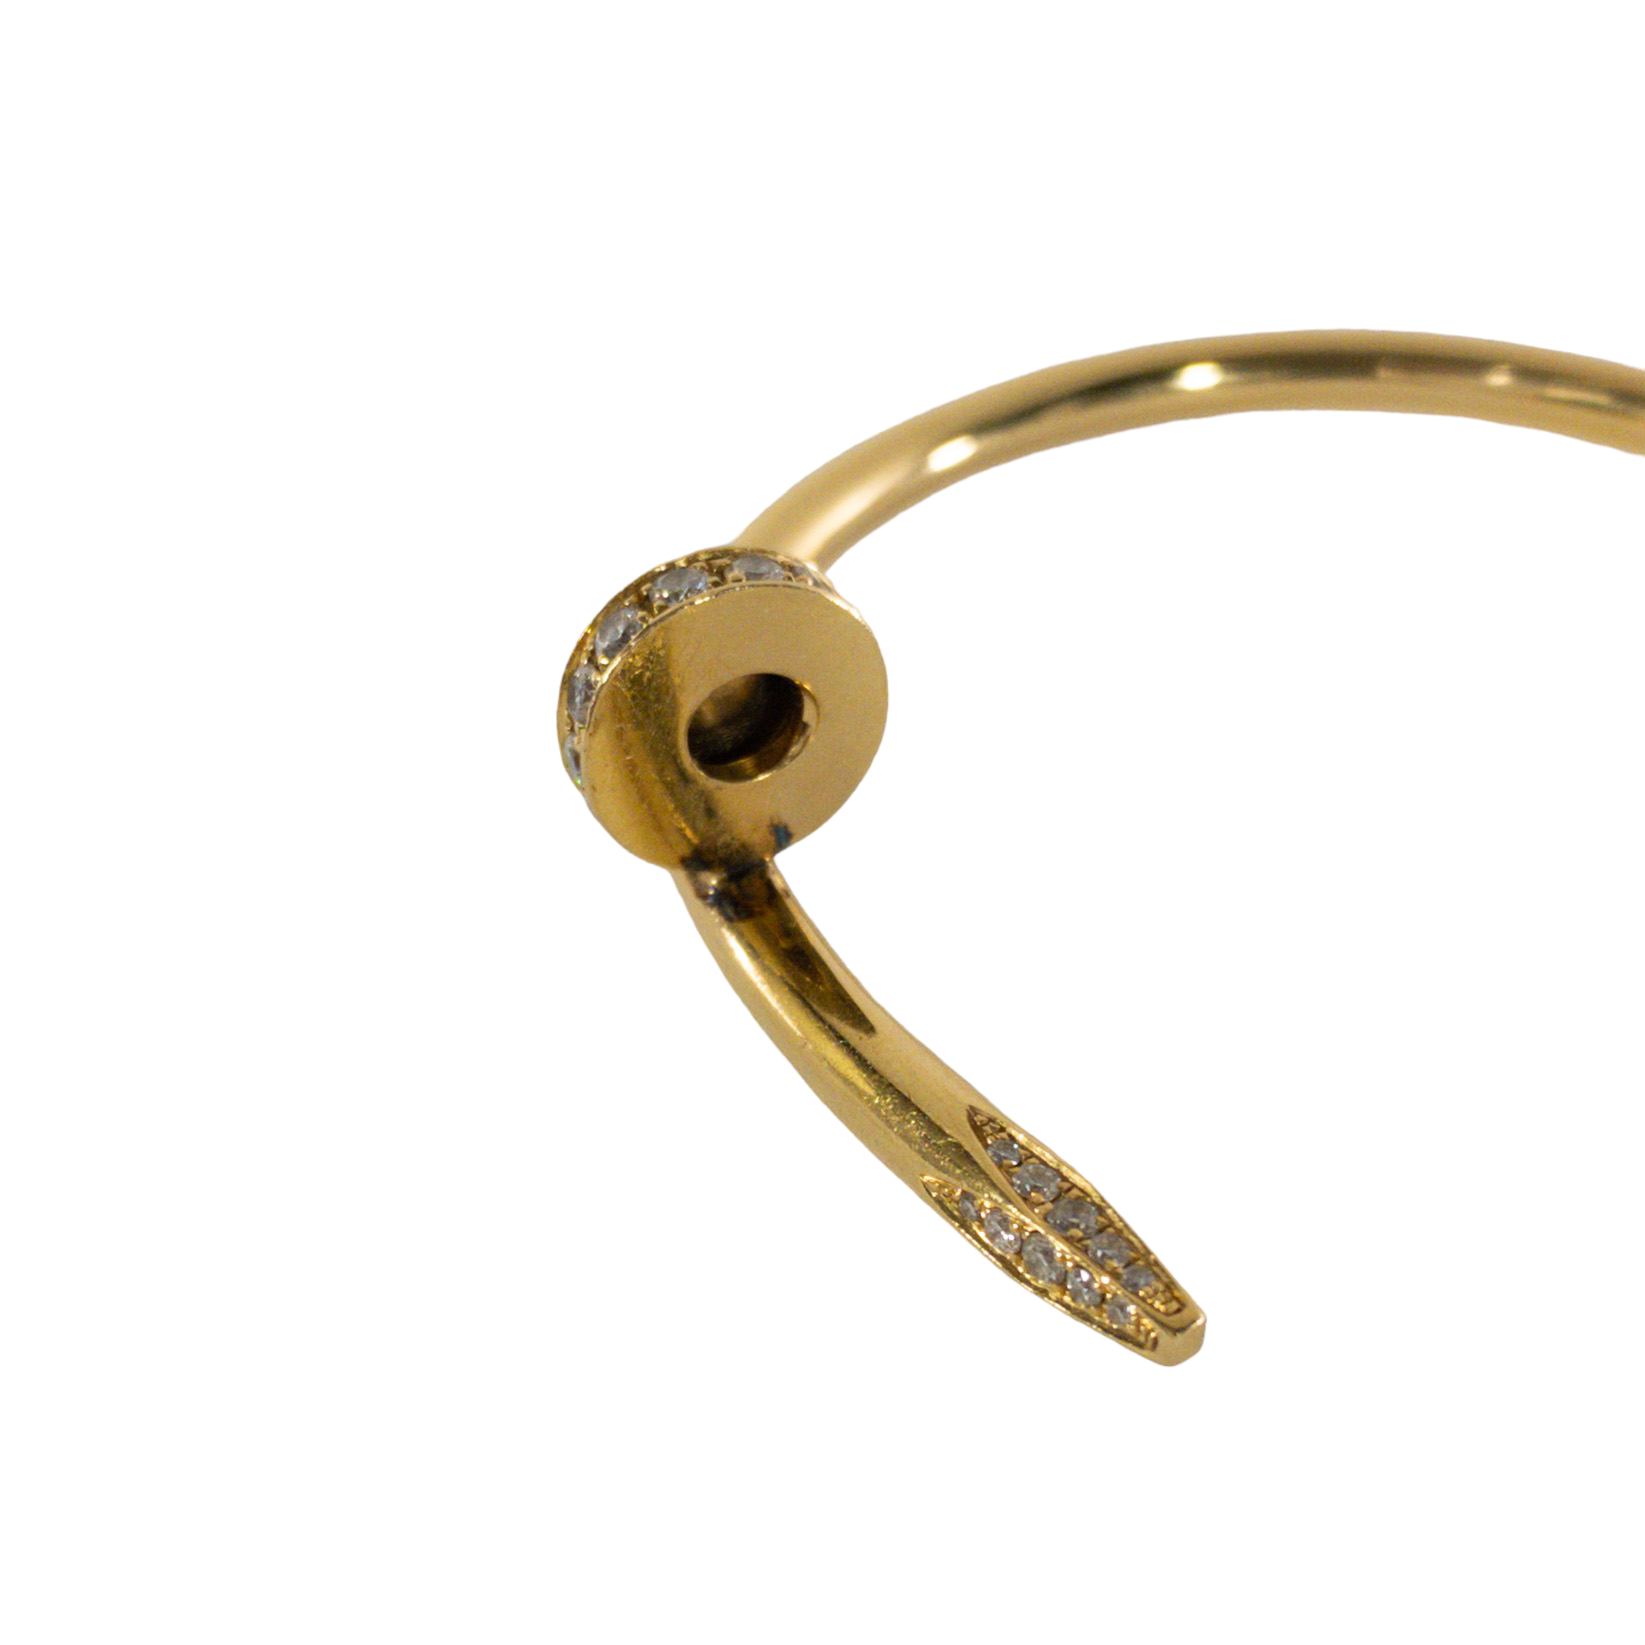 Cartier Yellow Gold Juste un Clou Diamond Bracelet